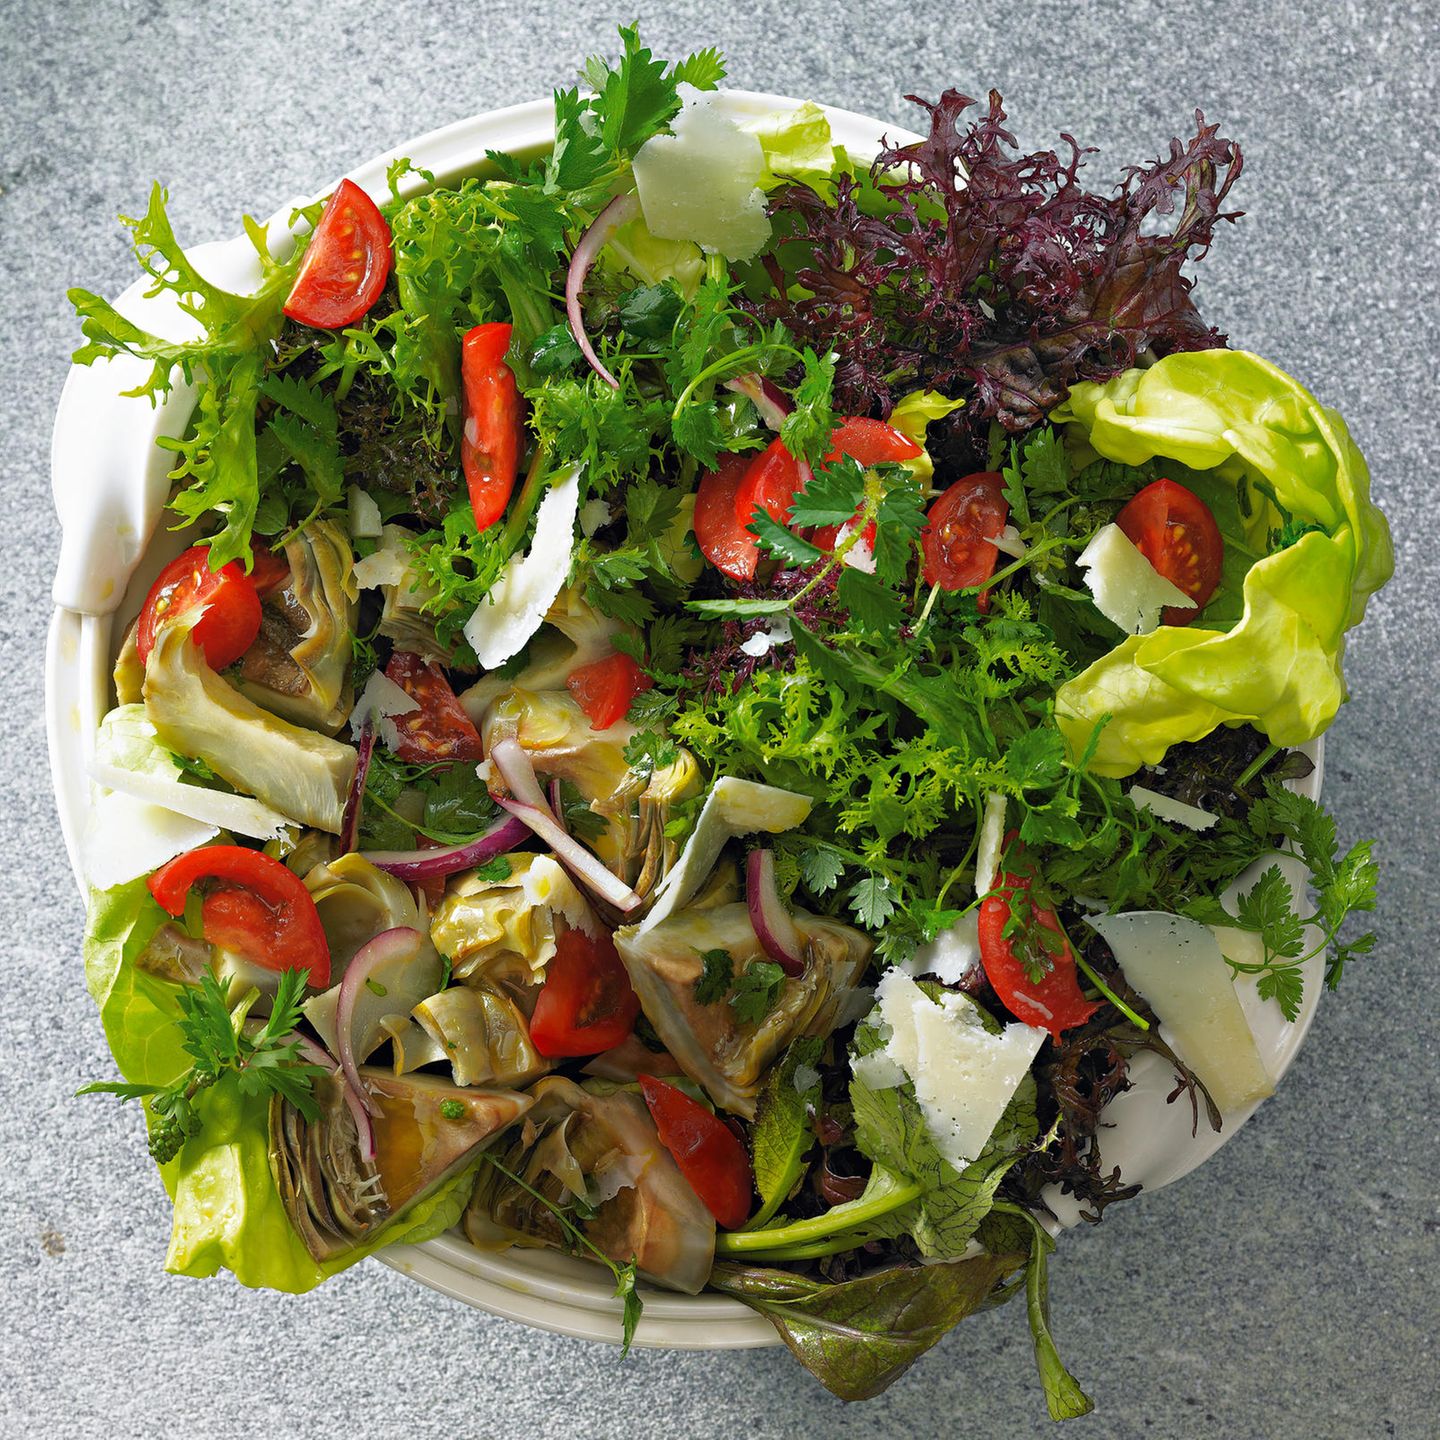 Blattsalat mit Kräutern und Artischocken